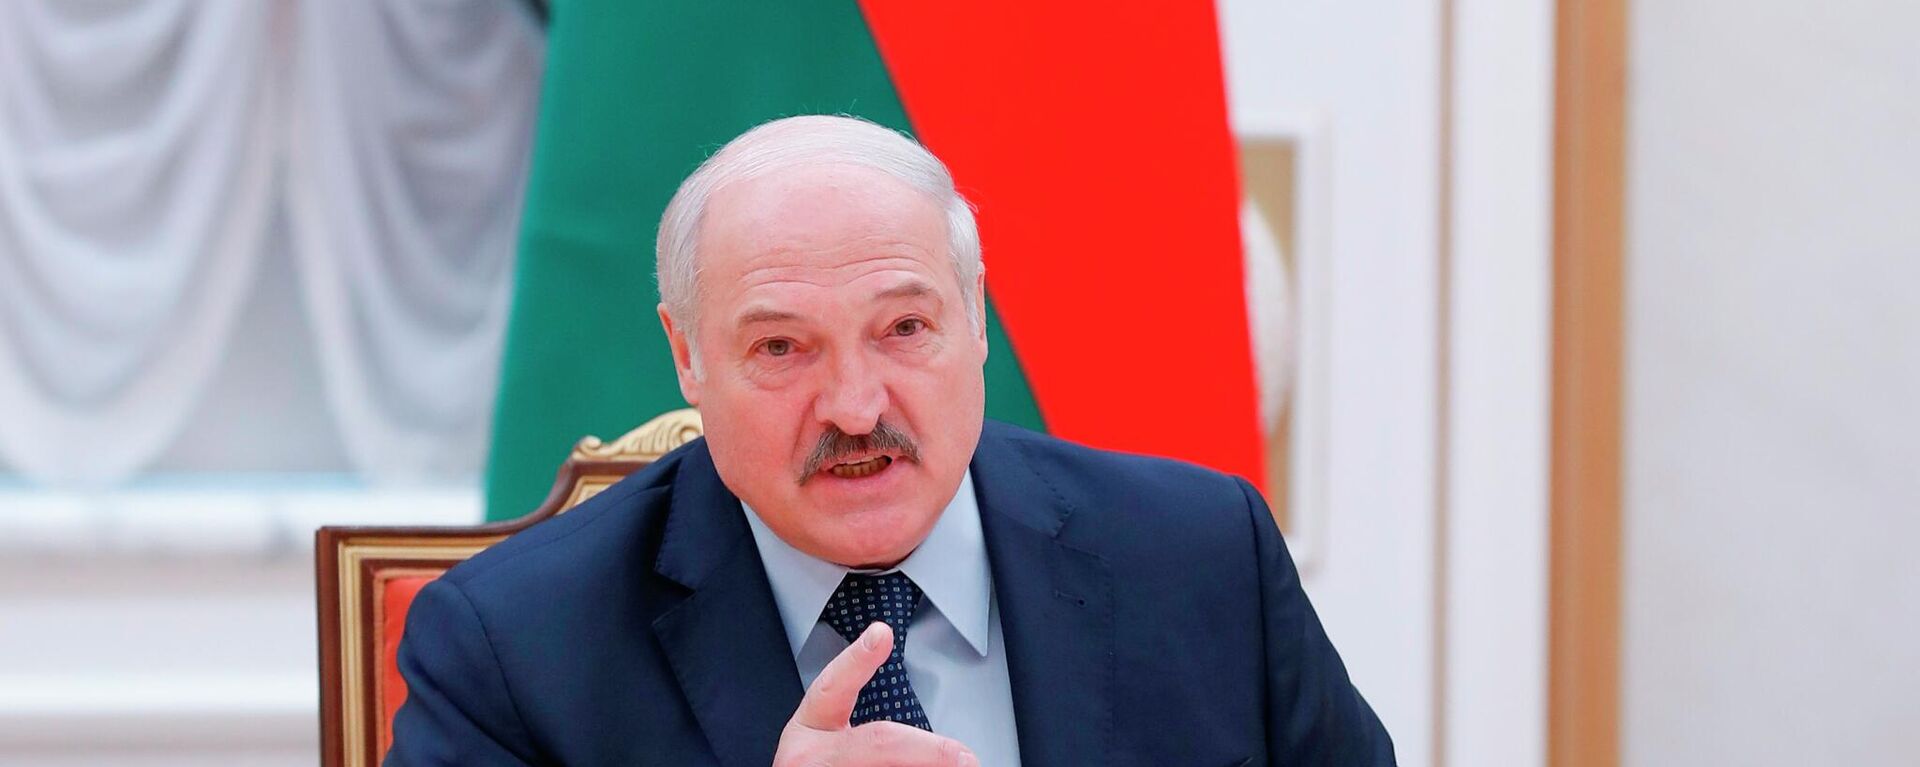 Президент Белоруссии Александр Лукашенко, архивное фото - Sputnik Литва, 1920, 30.07.2021